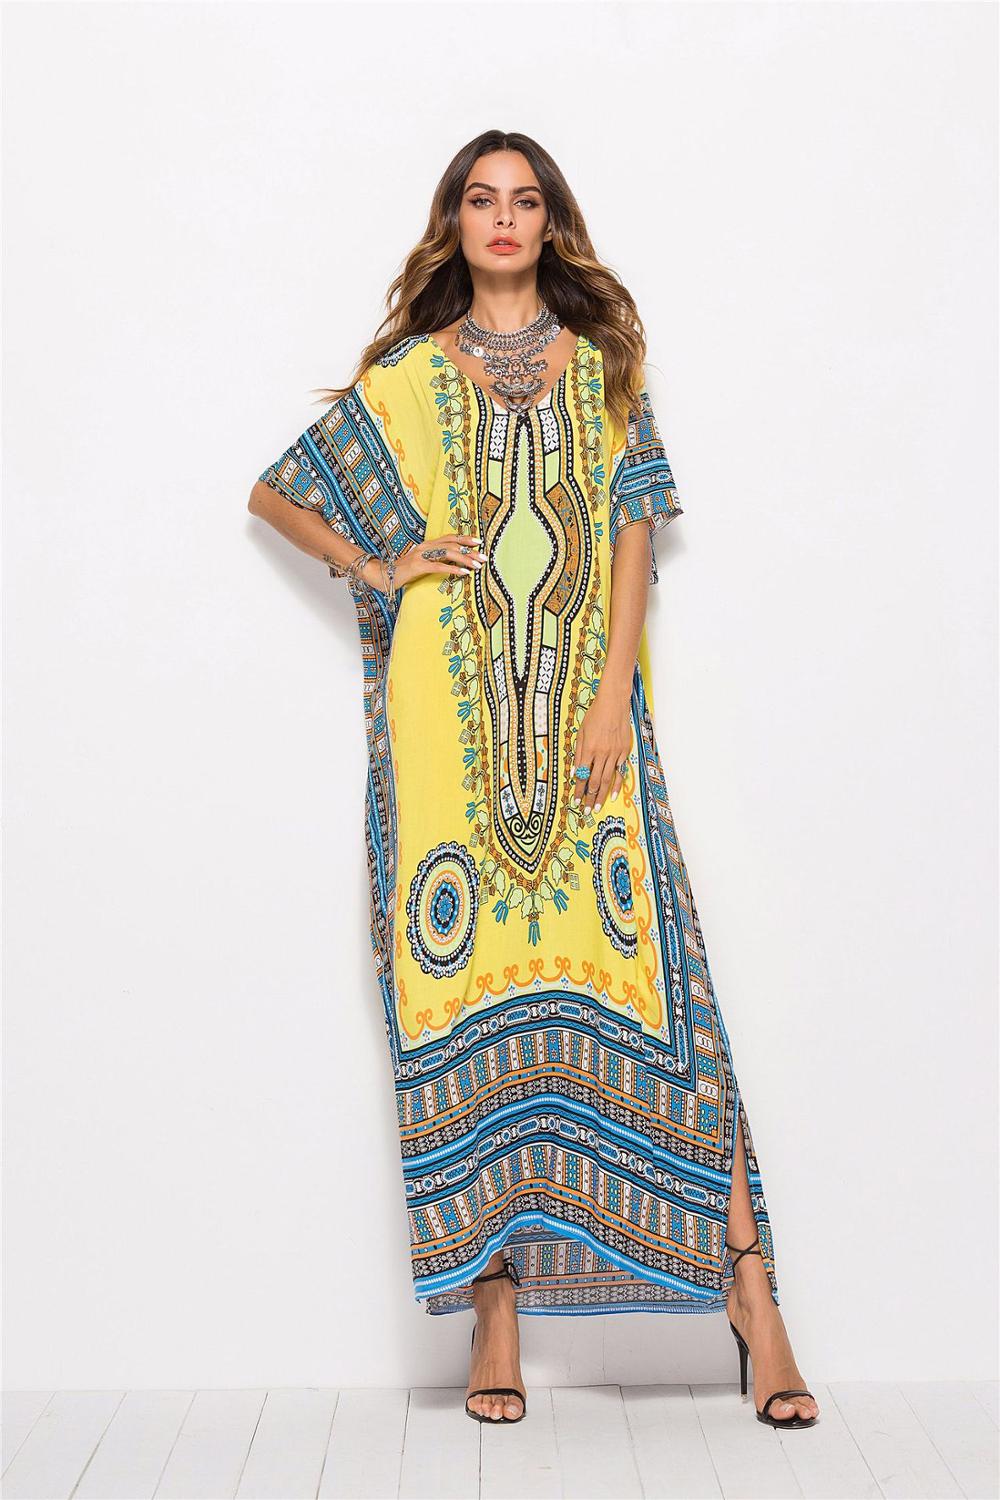 New Fashion Dress For Women Elegant Oversized Dress African Print Dashiki Dresses For Lady